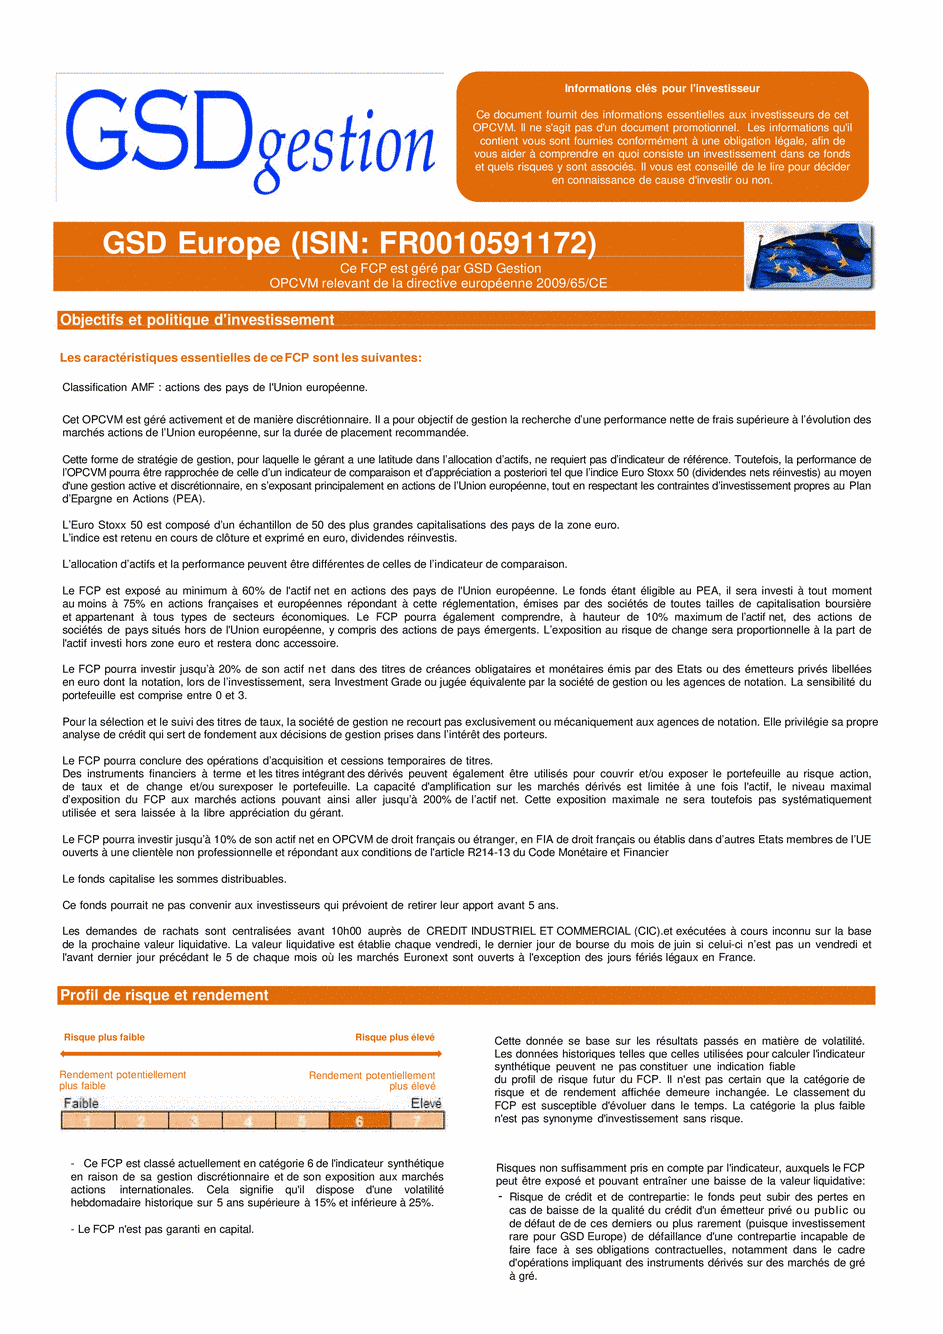 DICI-Prospectus Complet GSD Europe - 11/01/2021 - Français